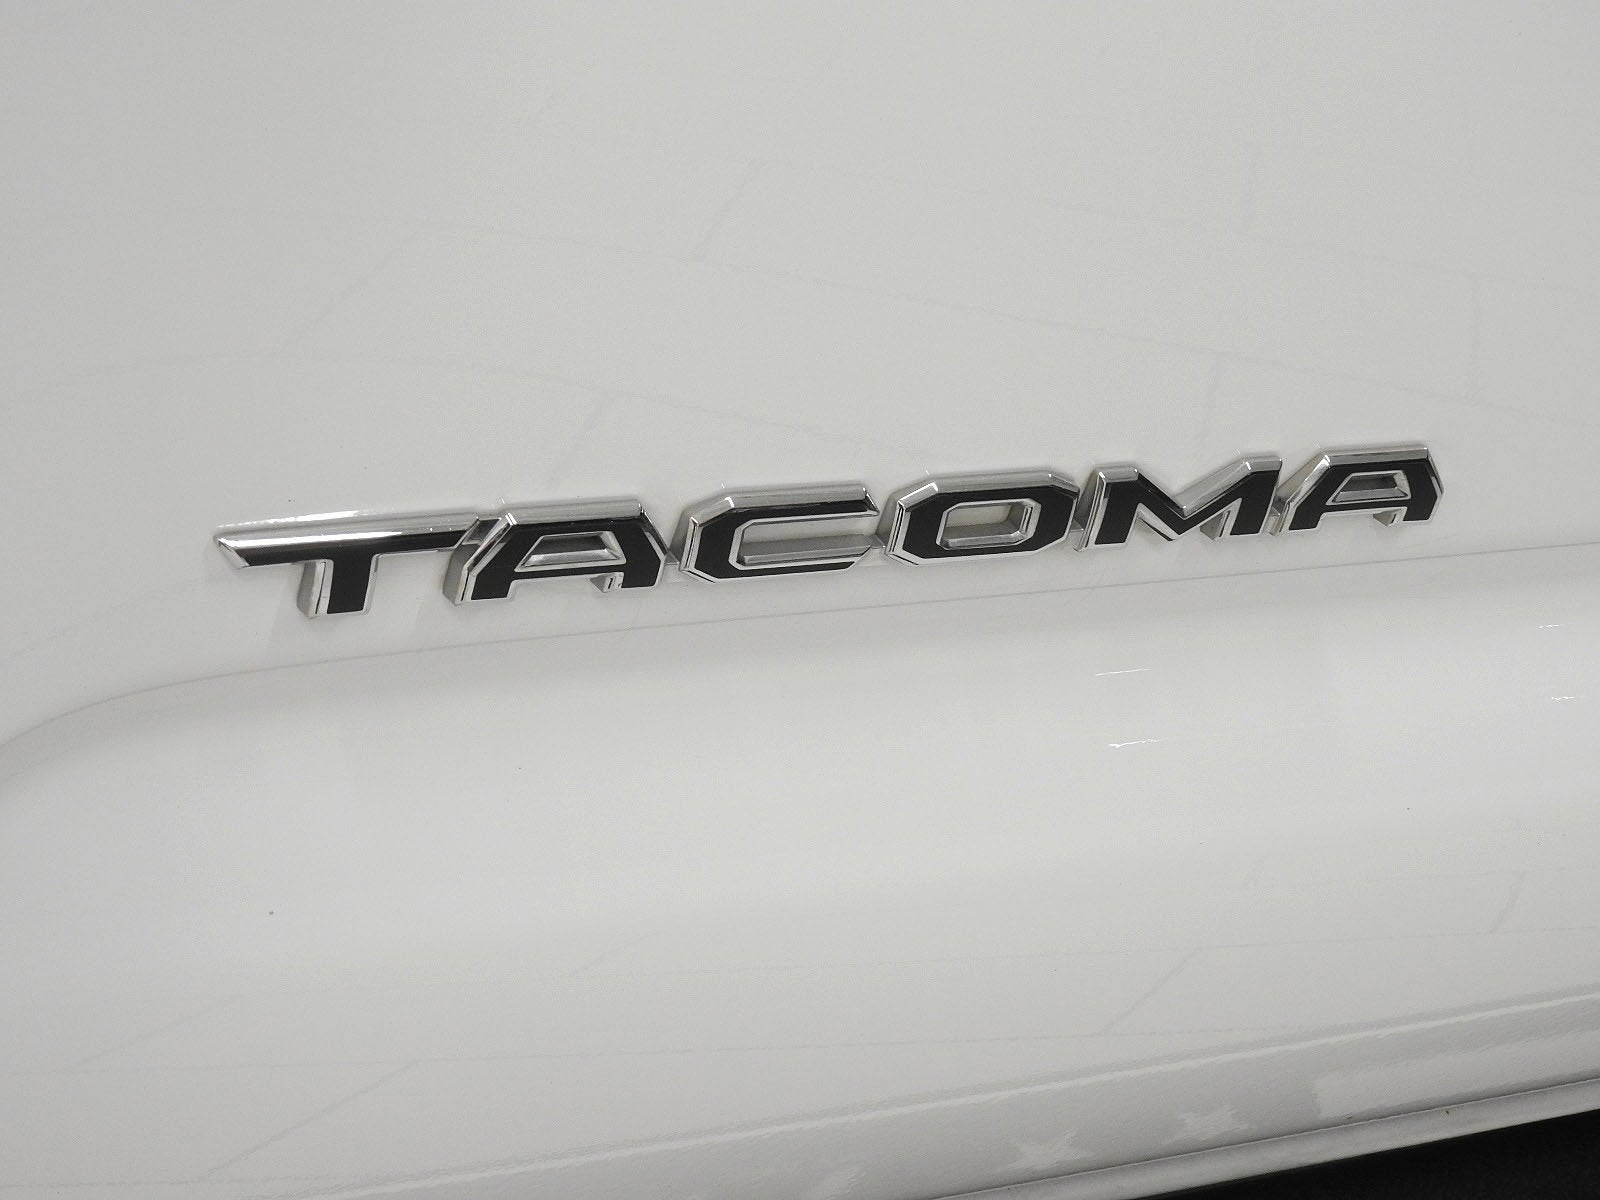 2019 Toyota Tacoma 4WD TRD Sport